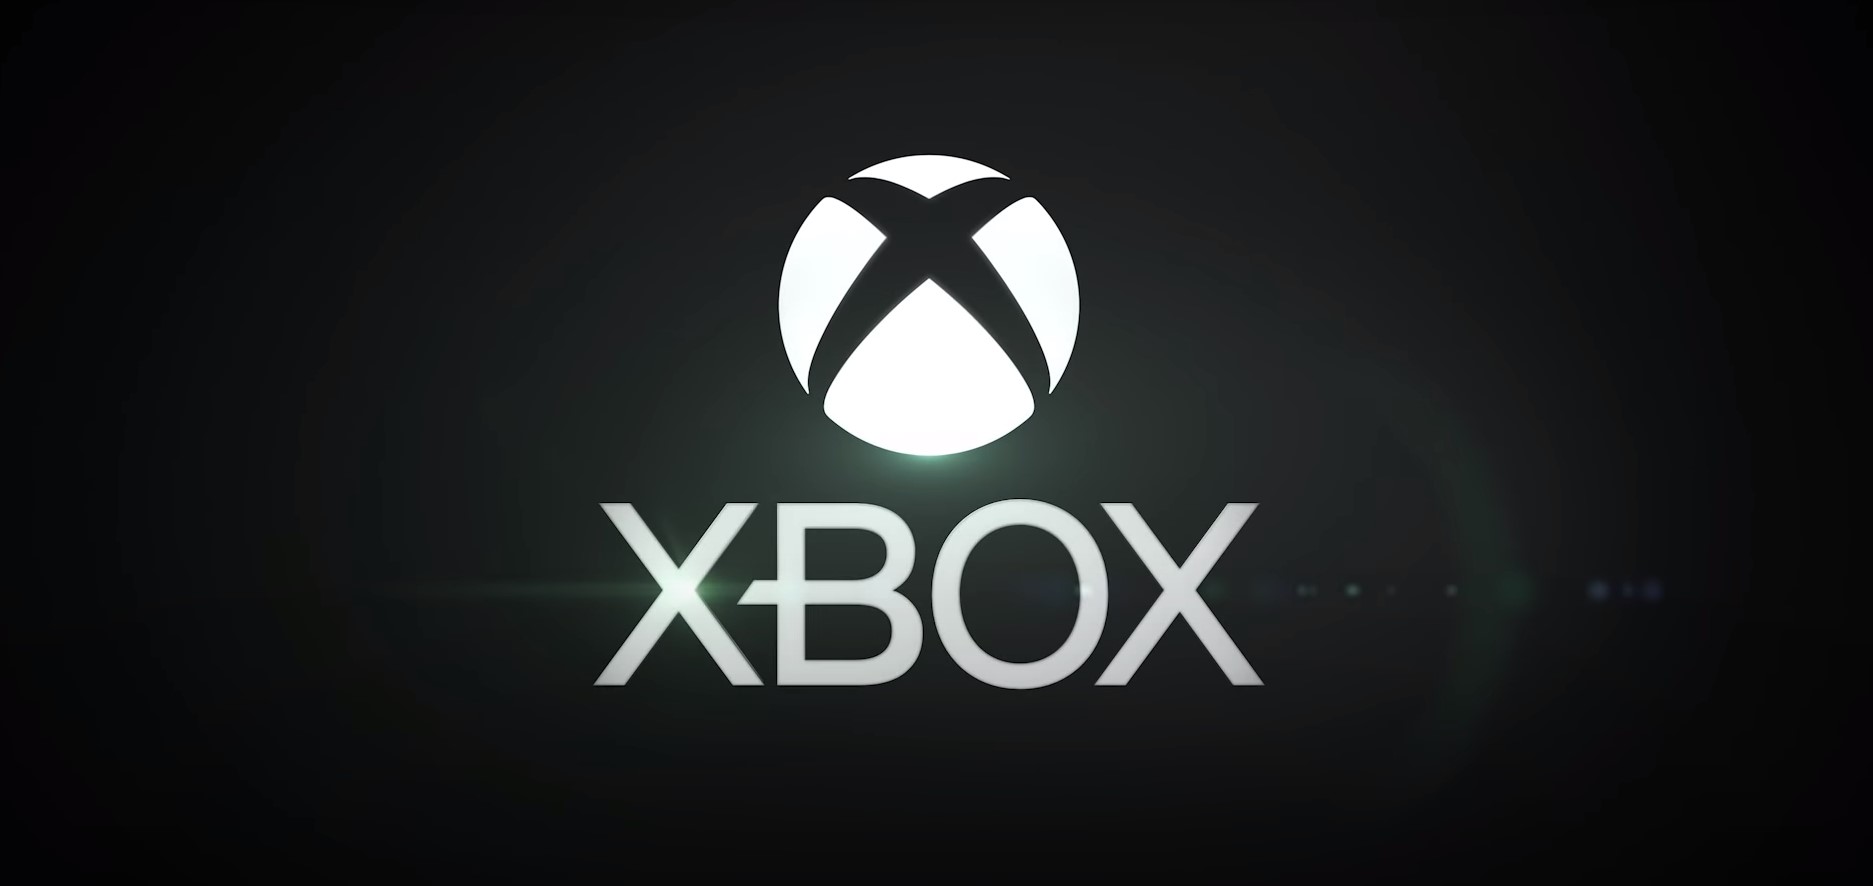 Xbox Series X boot screen